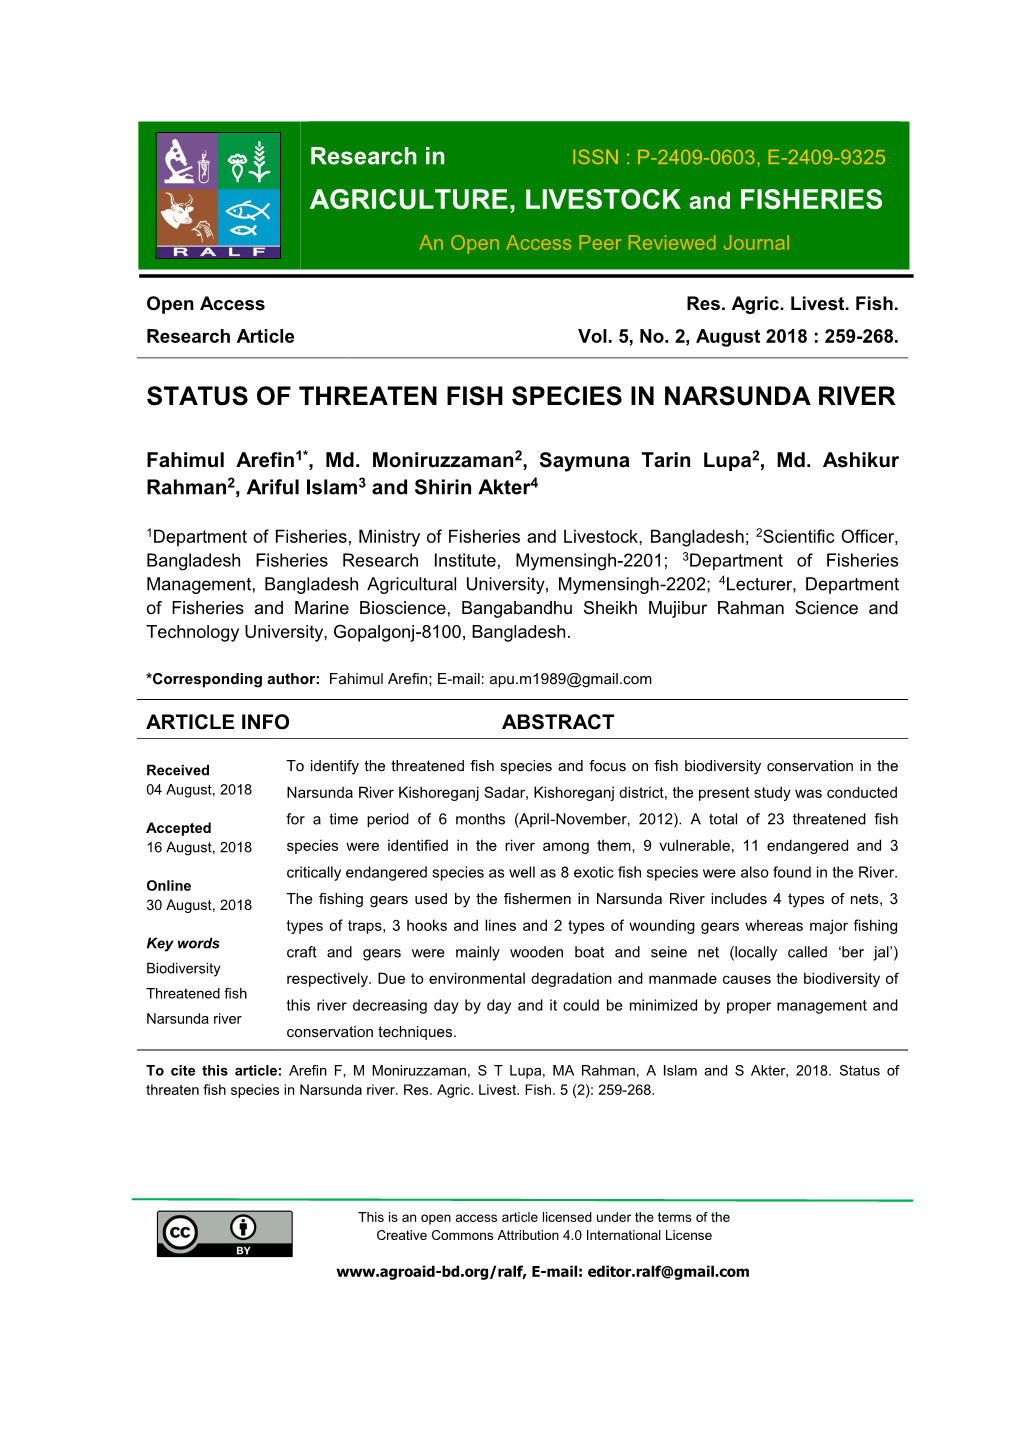 Status of Threaten Fish Species in Narsunda River